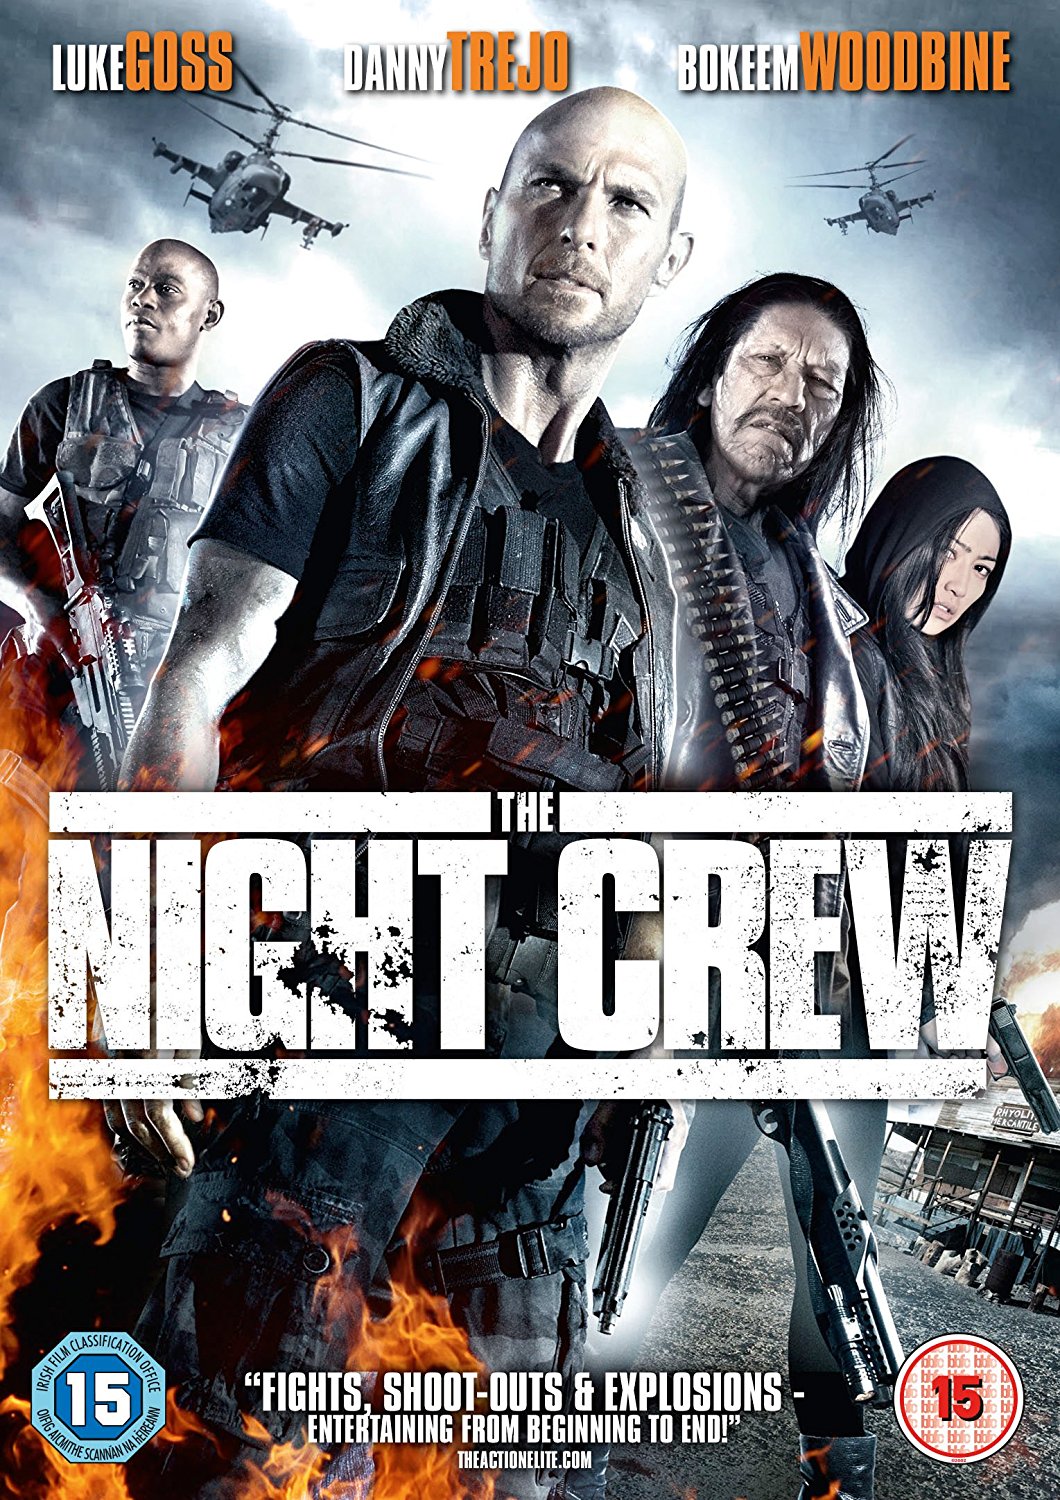 The Night Crew (DVD)